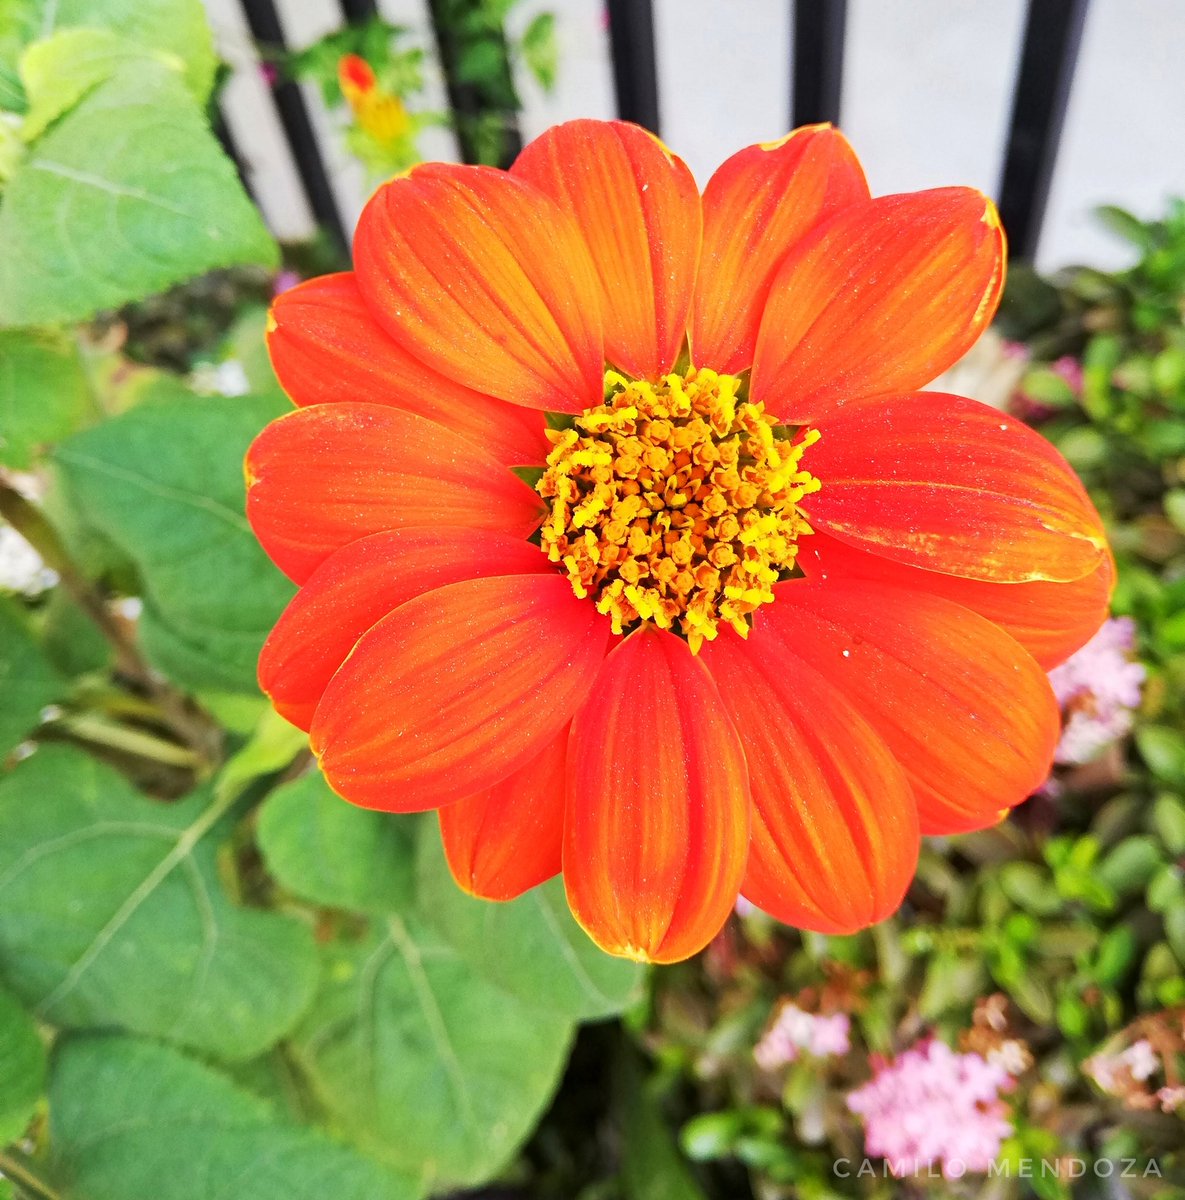 Eres como las flores y a mí me gustan mucho las flores. 🏵️

#Colombia #Córdoba #Montería #FloresDeColombia #Flores #Flowers #Orange #InstaLover #Photography #Pic #PhotoLover #InstaPhoto #Instagram